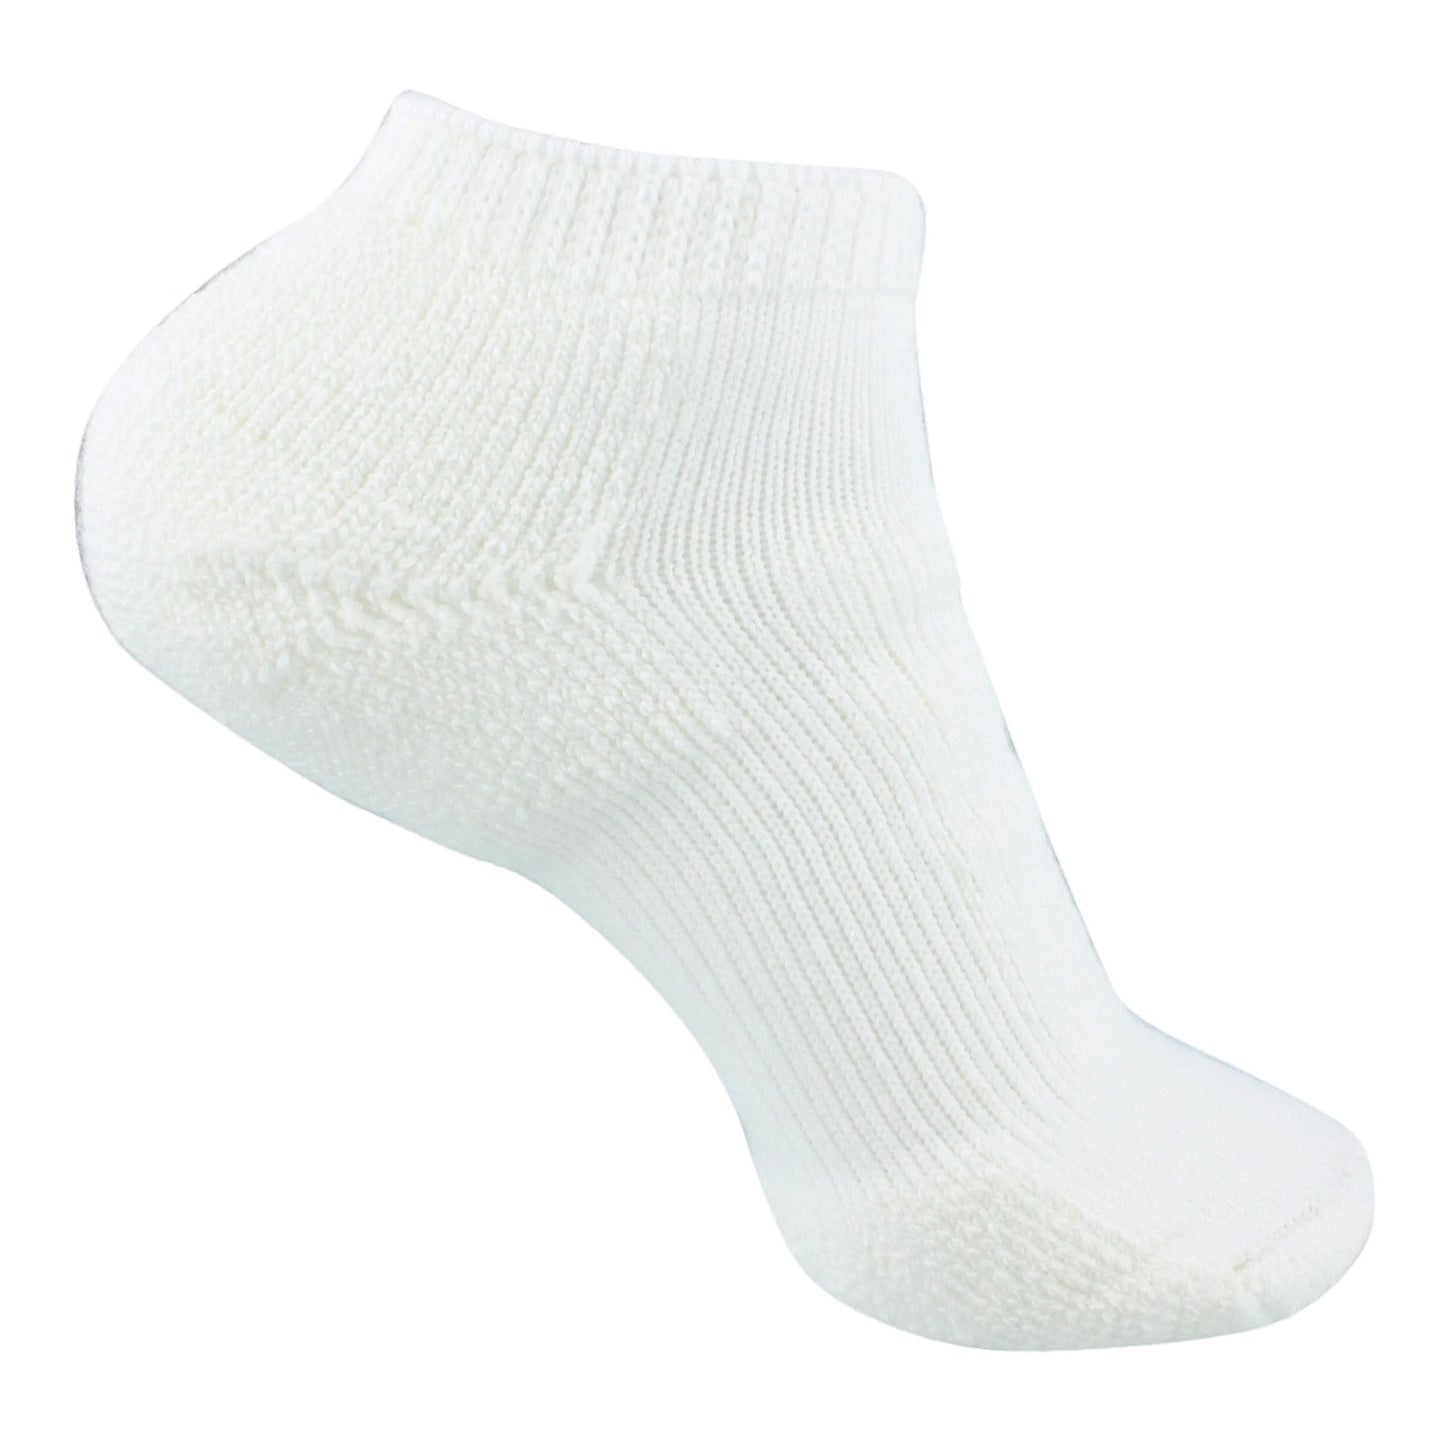 Peltz Shoes  Unisex Thorlo WMM Walking Socks - Medium - 1 Pack White WMM-11 004